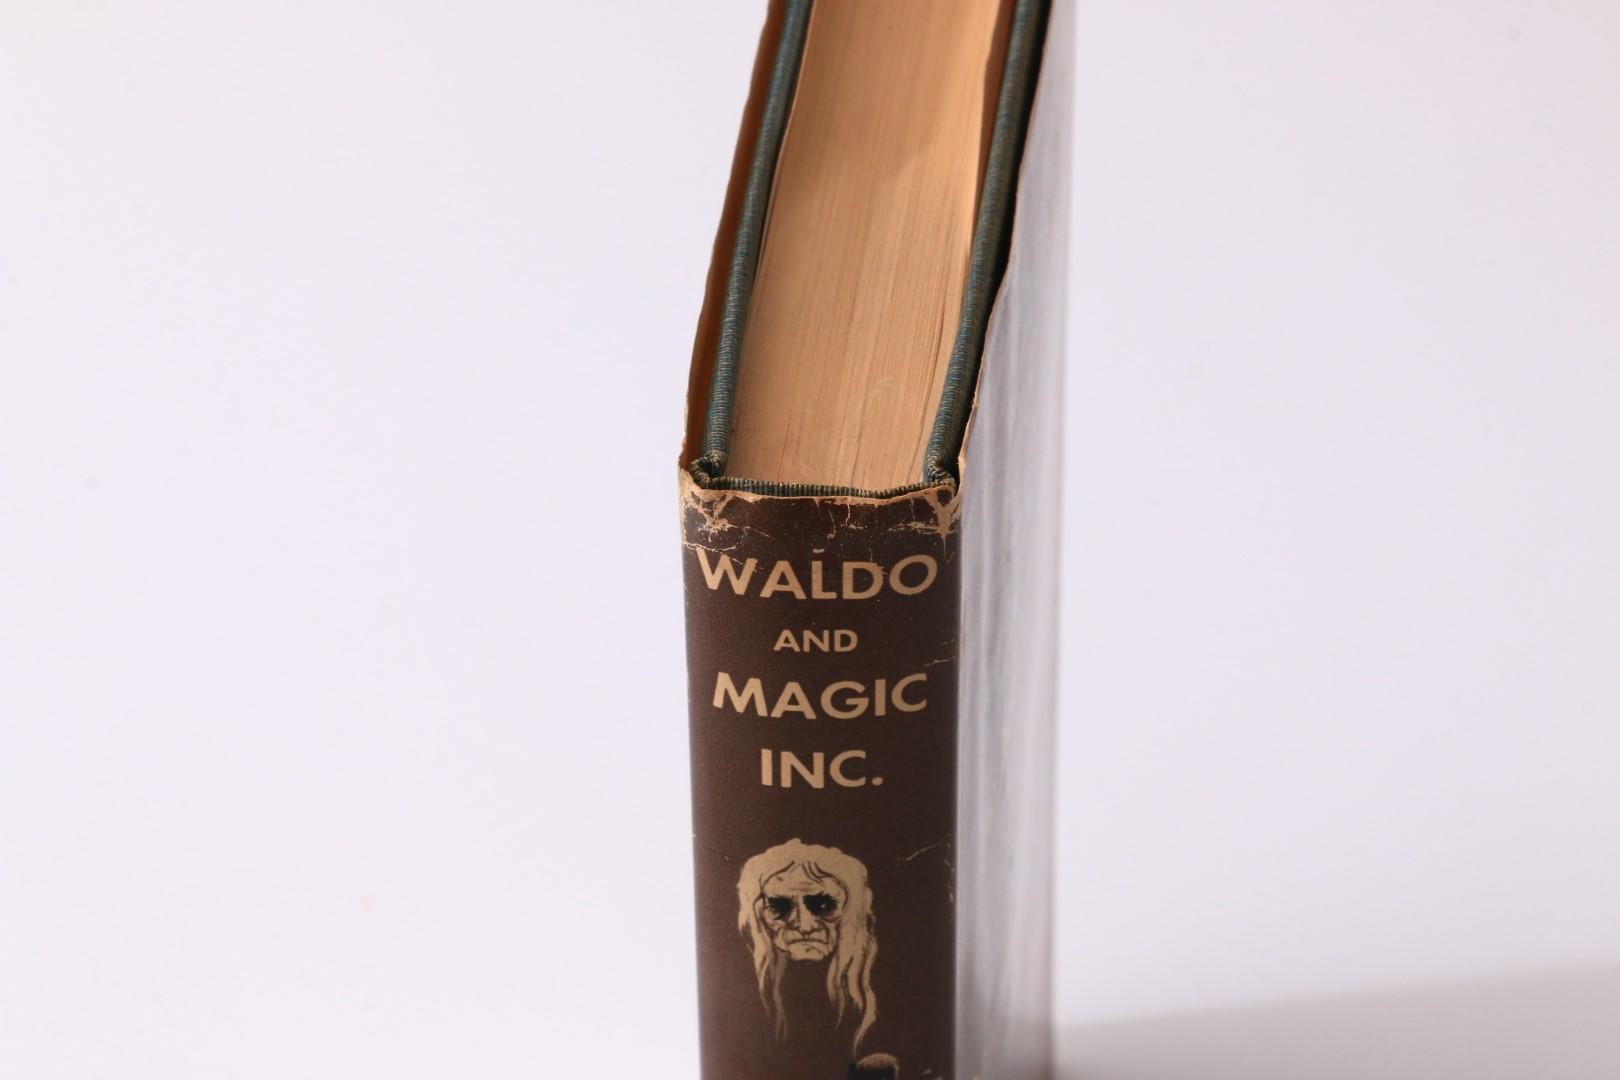 Robert A. Heinlein - Waldo and Magic, Inc. - Doubleday, 1950, First Edition.